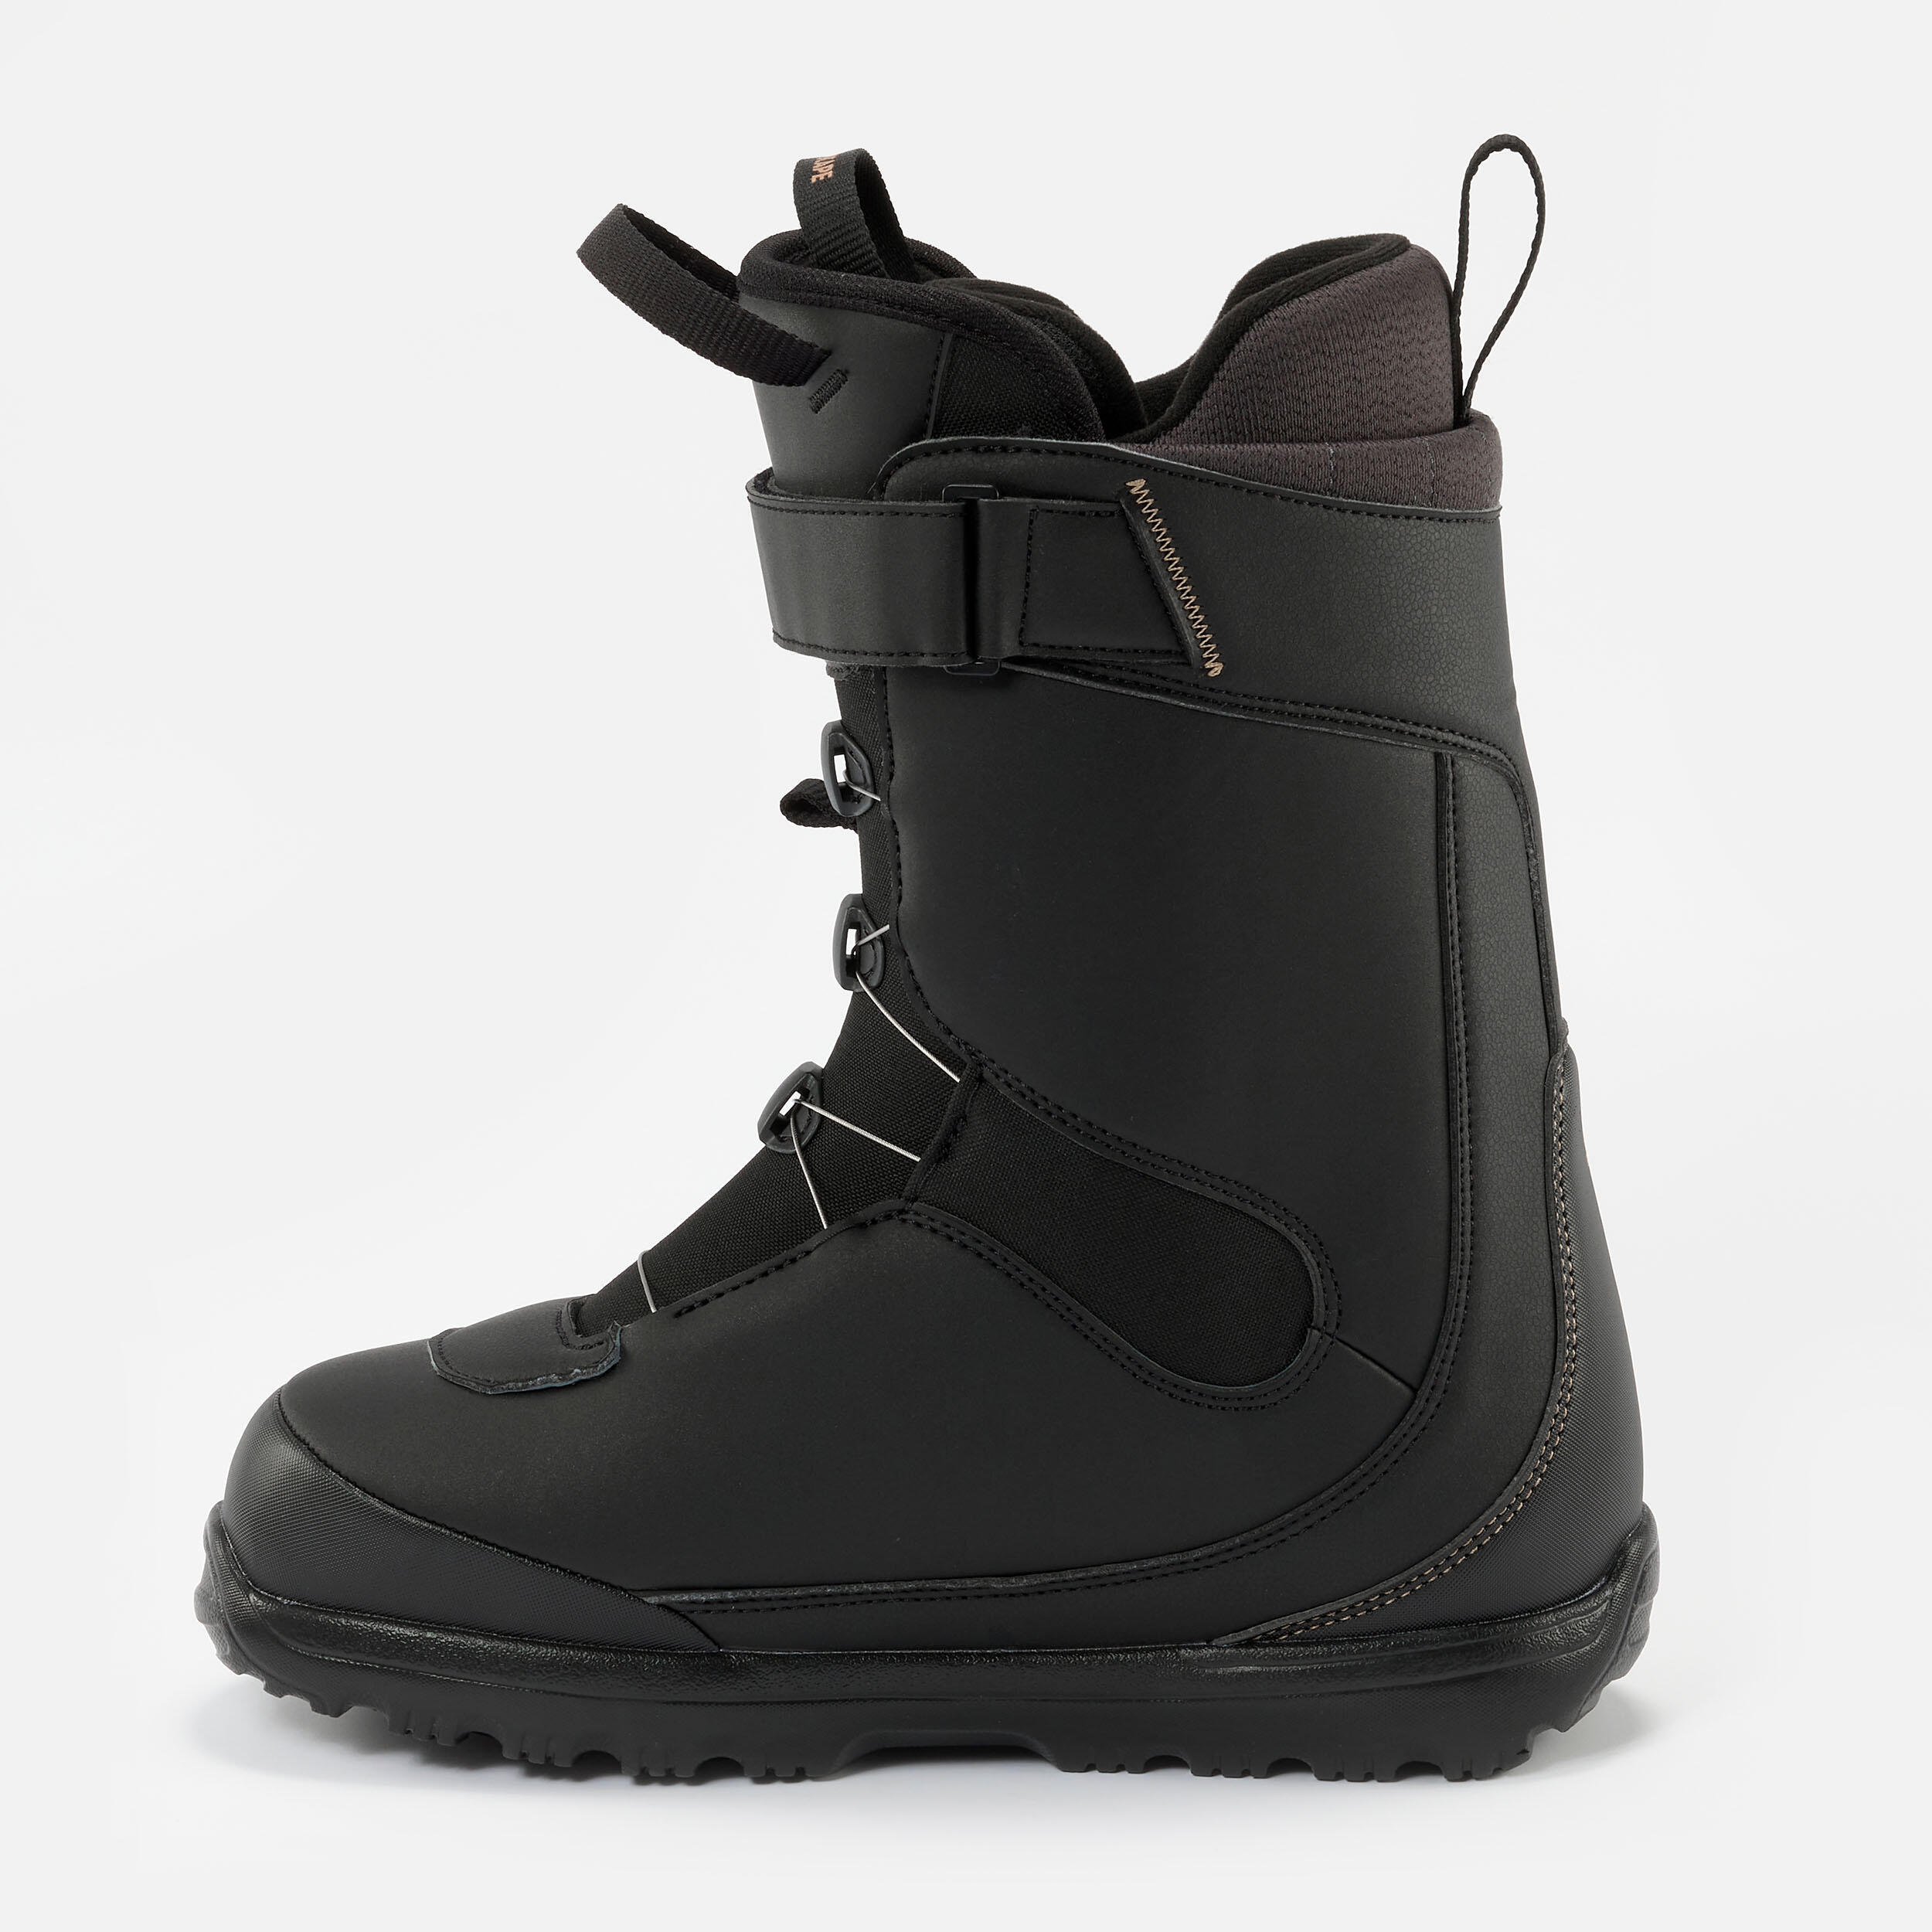 Women's snowboard boots with adjustment wheel, medium flex - ALLROAD 500 black 5/15